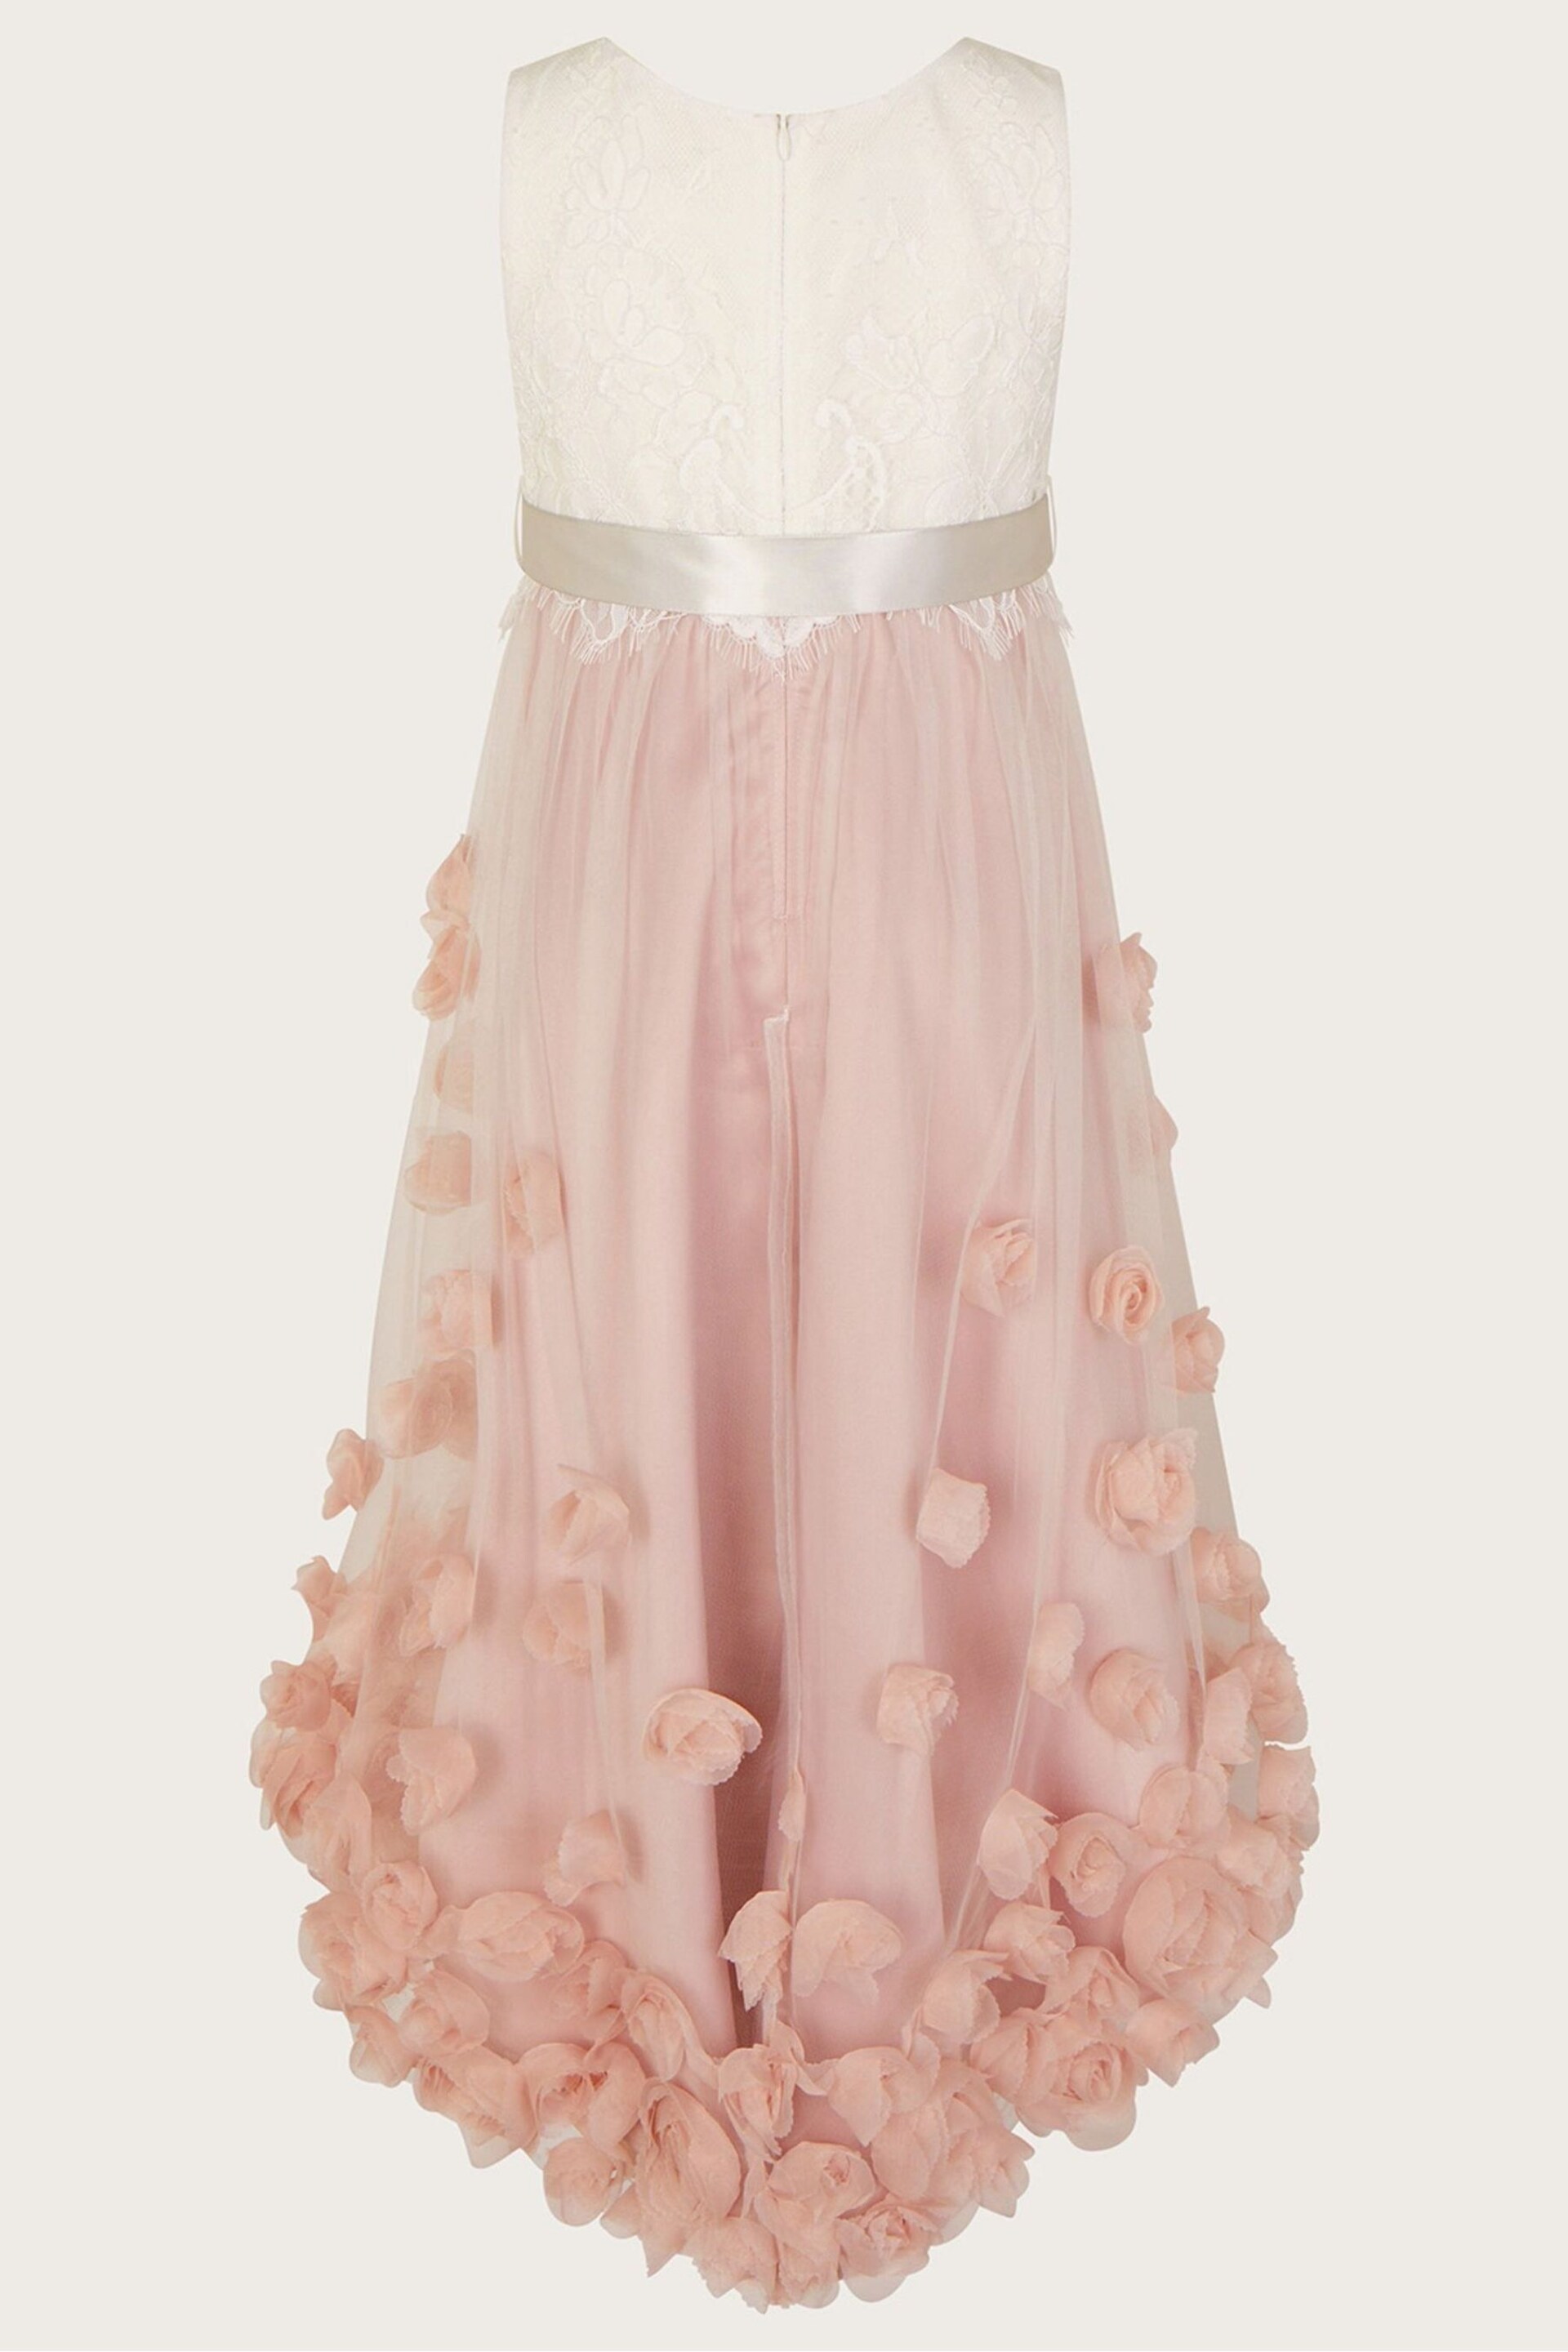 Monsoon Pink Dusky Ianthe Dress - Image 2 of 3